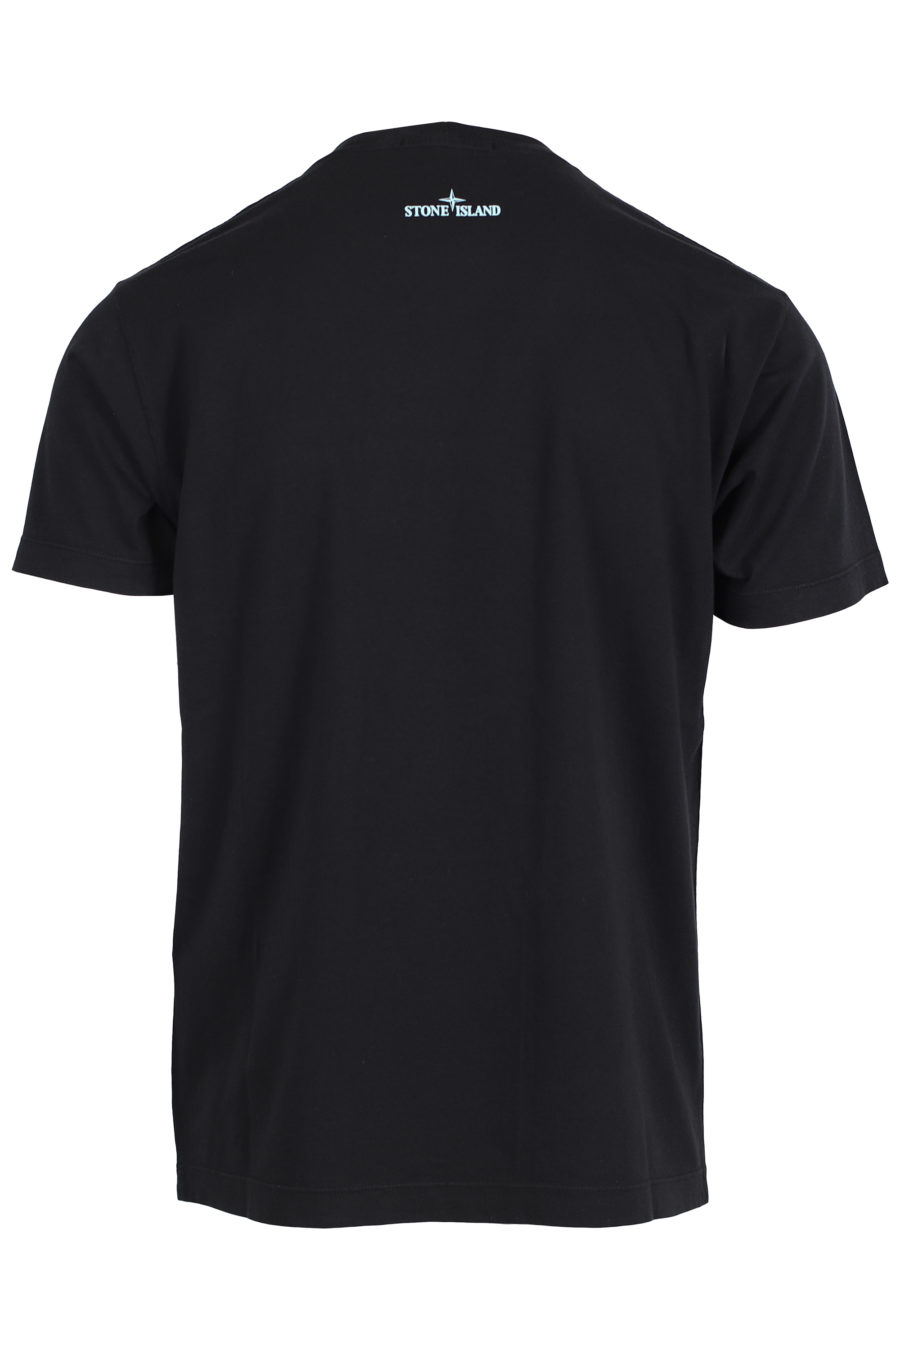 Camiseta negra con logotipo multicolor grande - IMG 2510